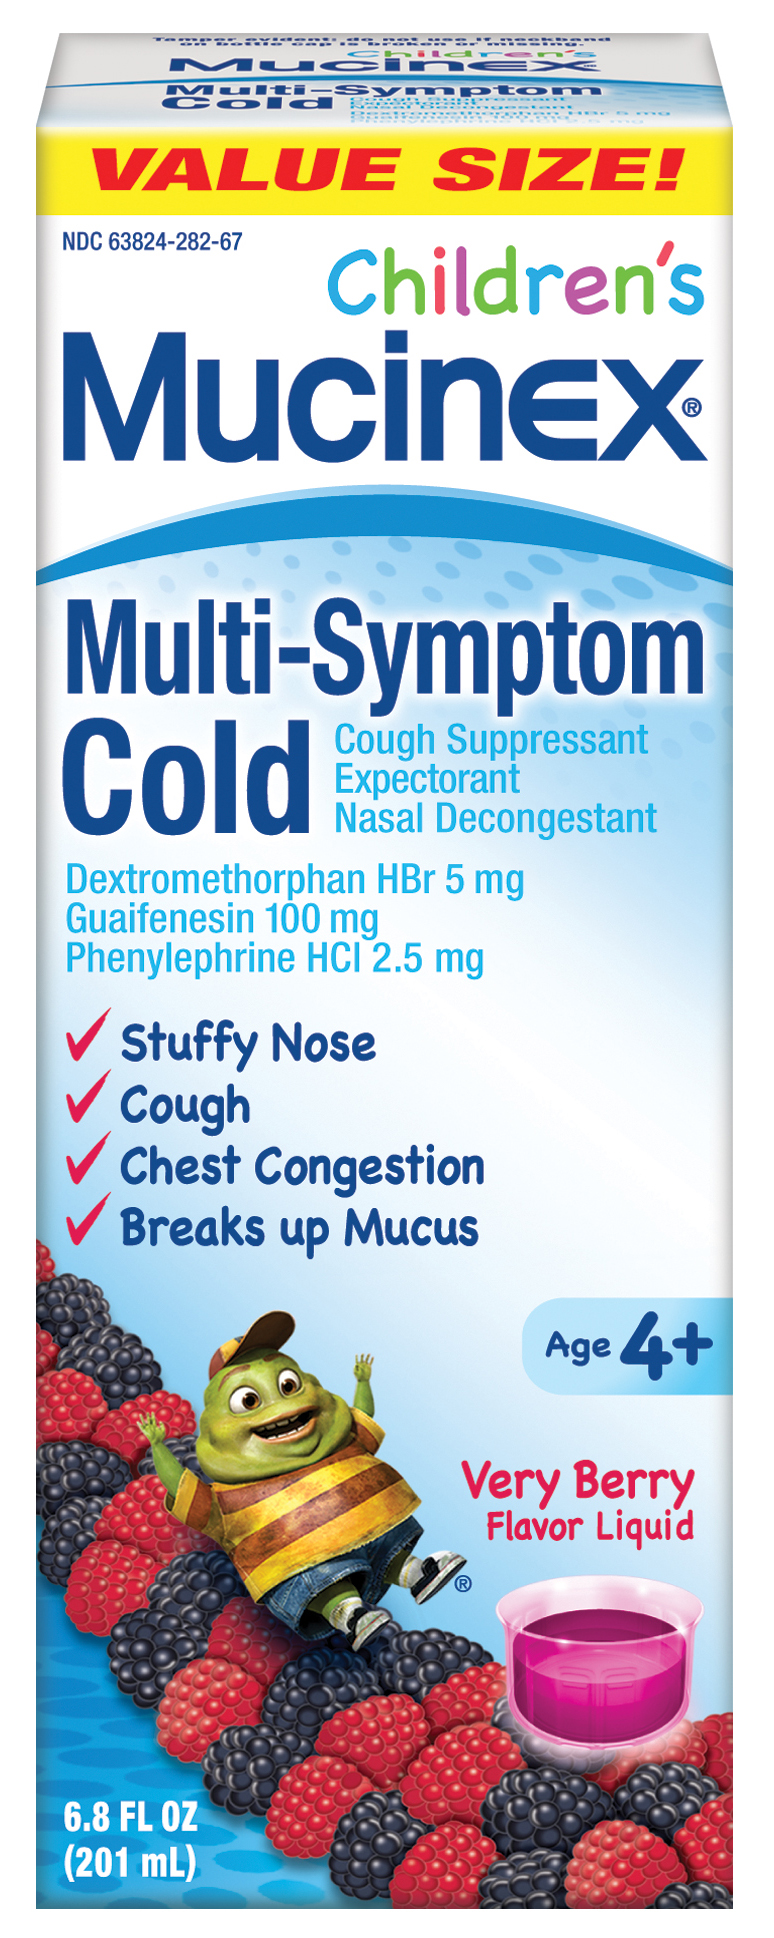 MUCINEX® Children's Multi-Symptom Liquid -Cold Very Berry